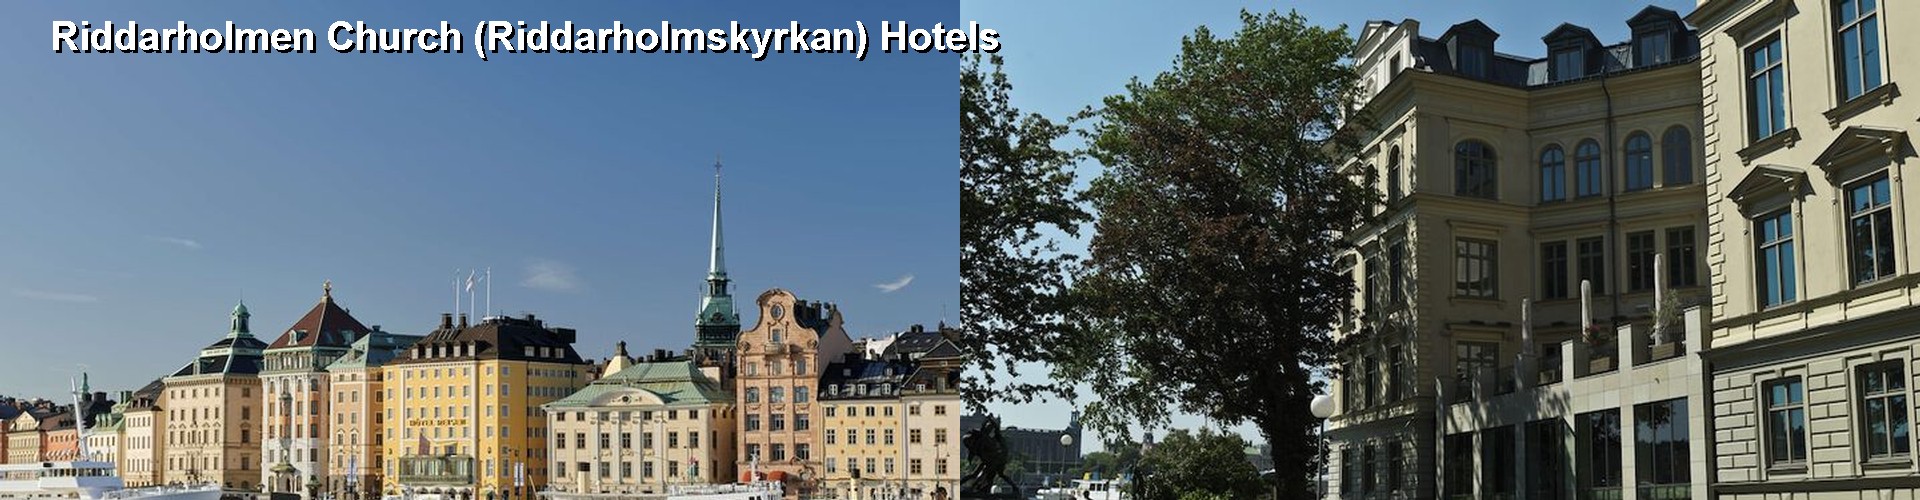 5 Best Hotels near Riddarholmen Church (Riddarholmskyrkan)